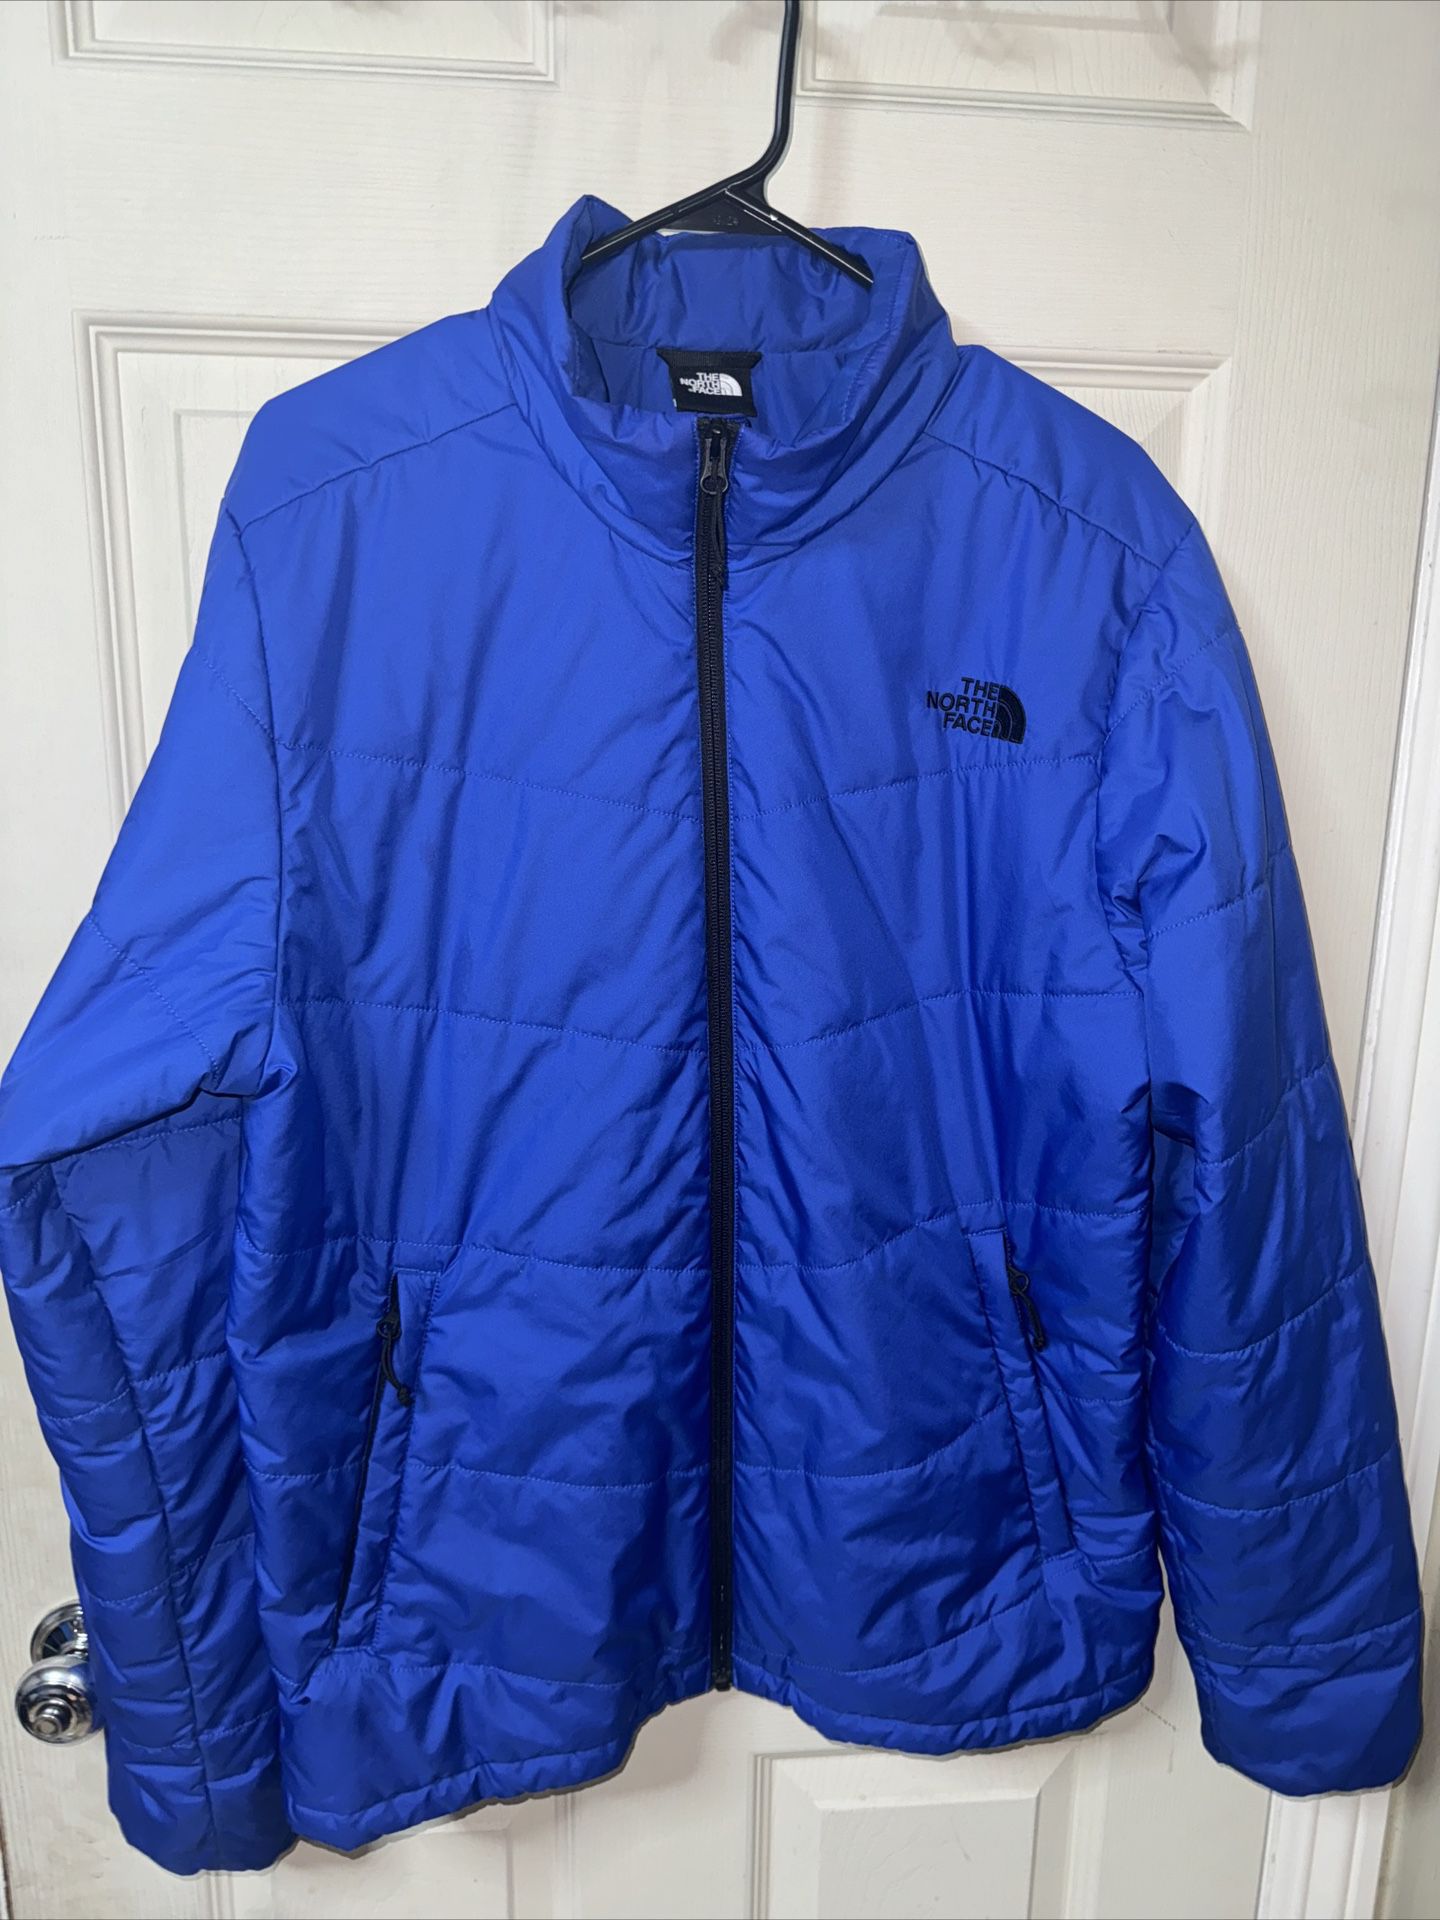 The North Face Men’ Royal Blue Long Sleeve Mock Neck Full-Zip Puffer Jacket. Size M